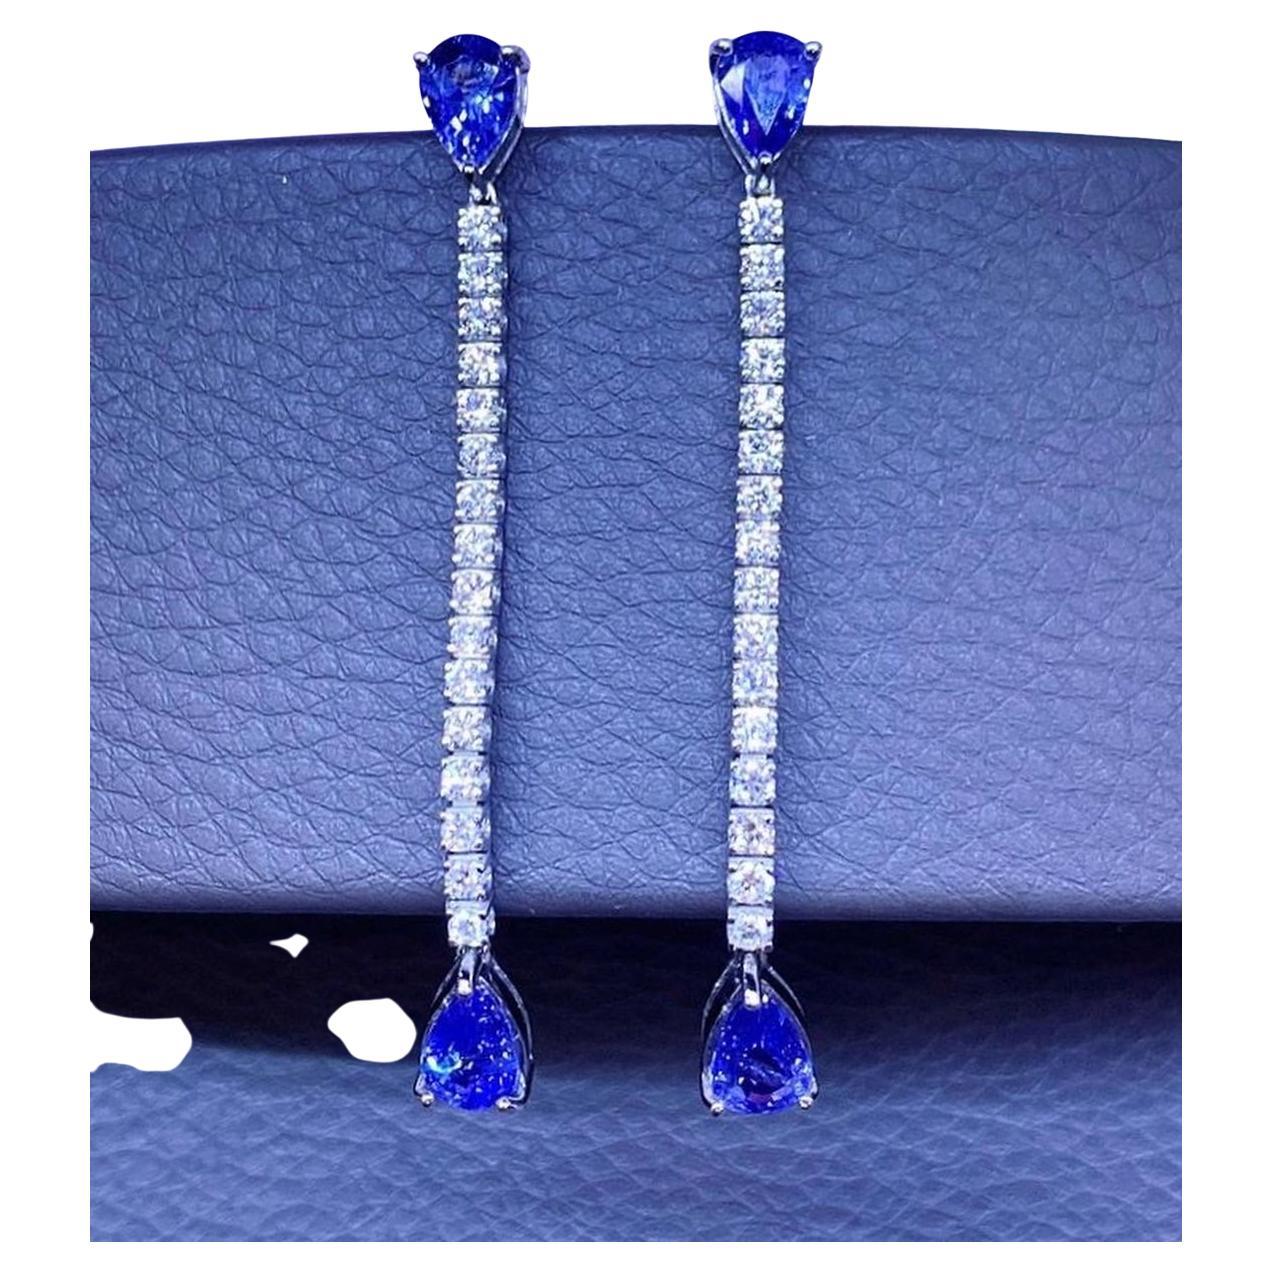 Stunning 5, 74 ct di Ceylon sapphires and diamonds on earrings 